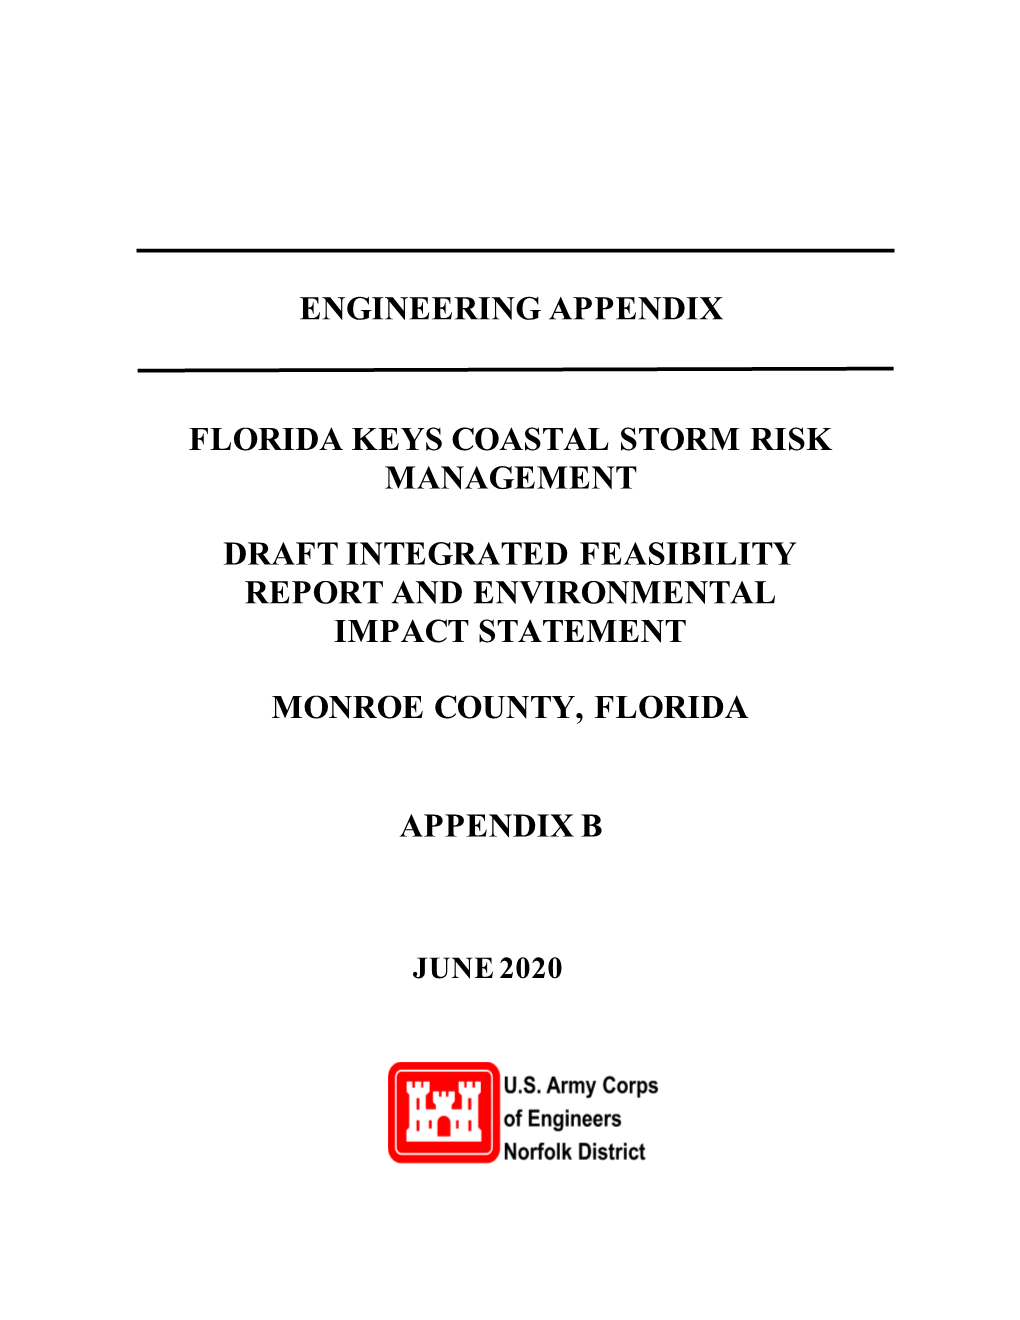 Engineering Appendix, Florida Keys Coastal Storm Risk Management